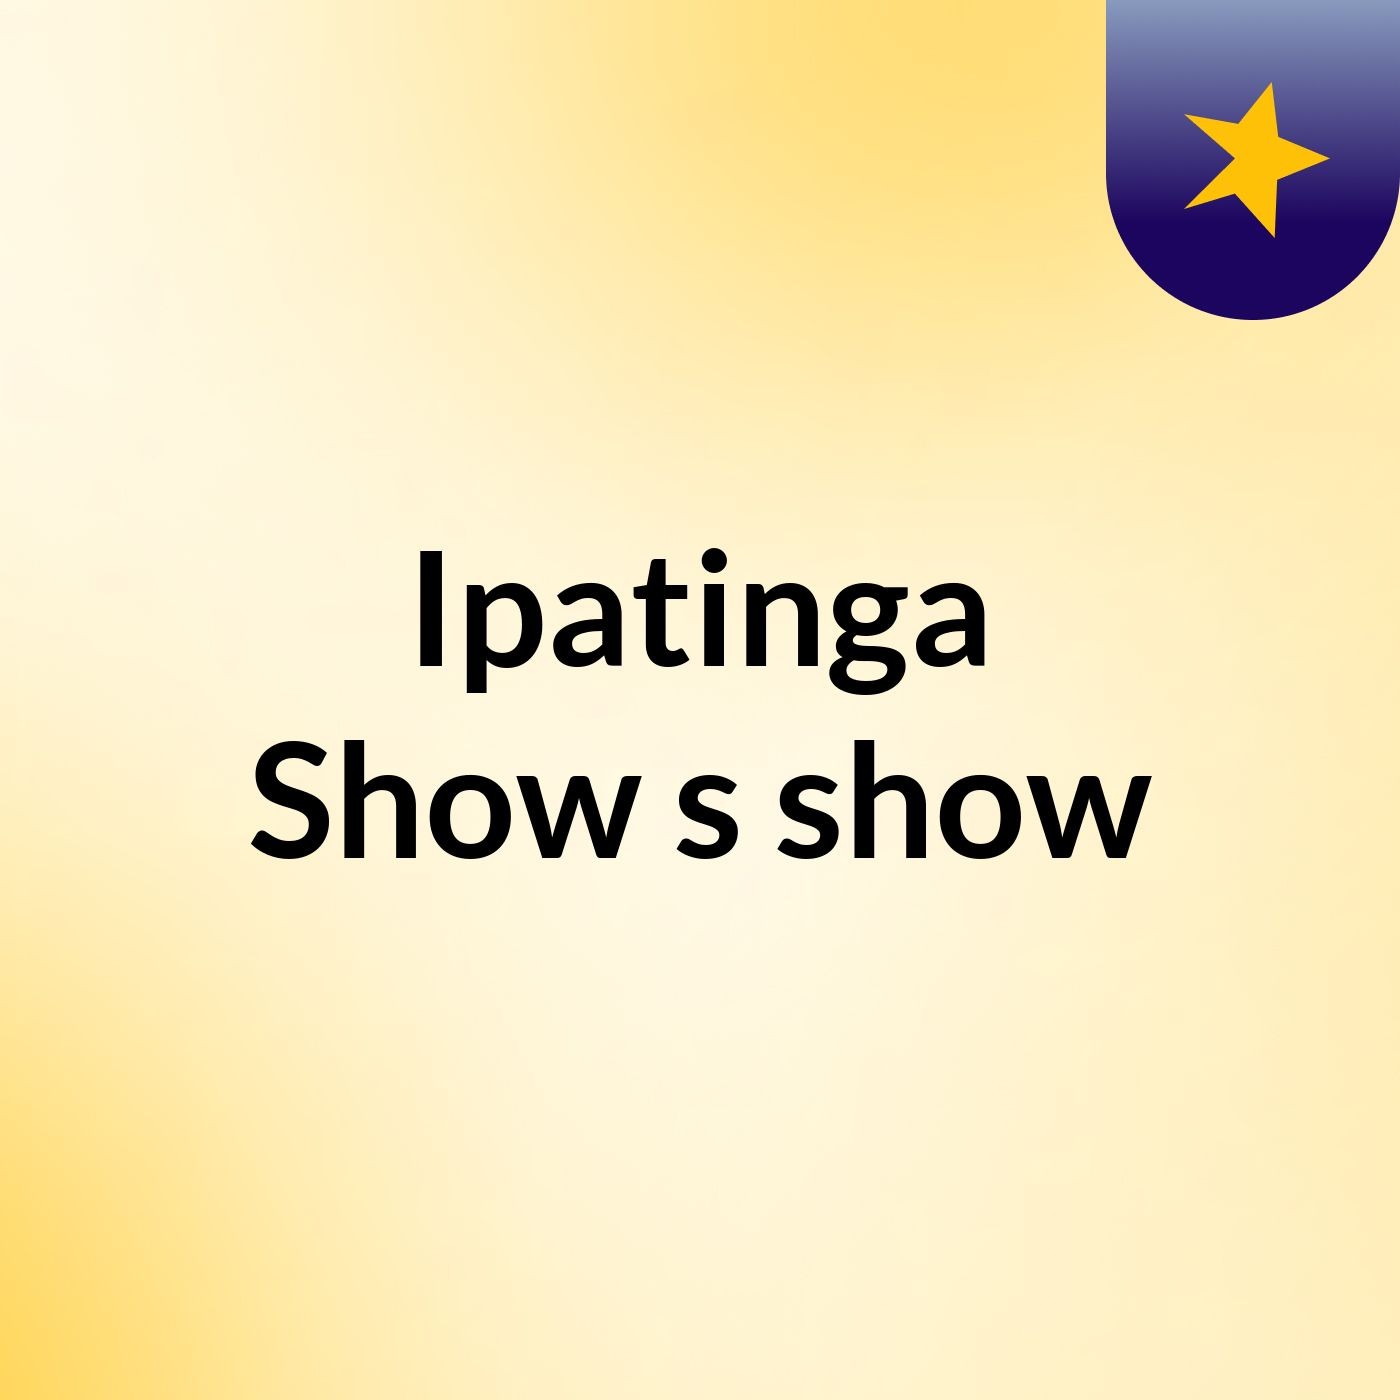 Ipatinga Show's show